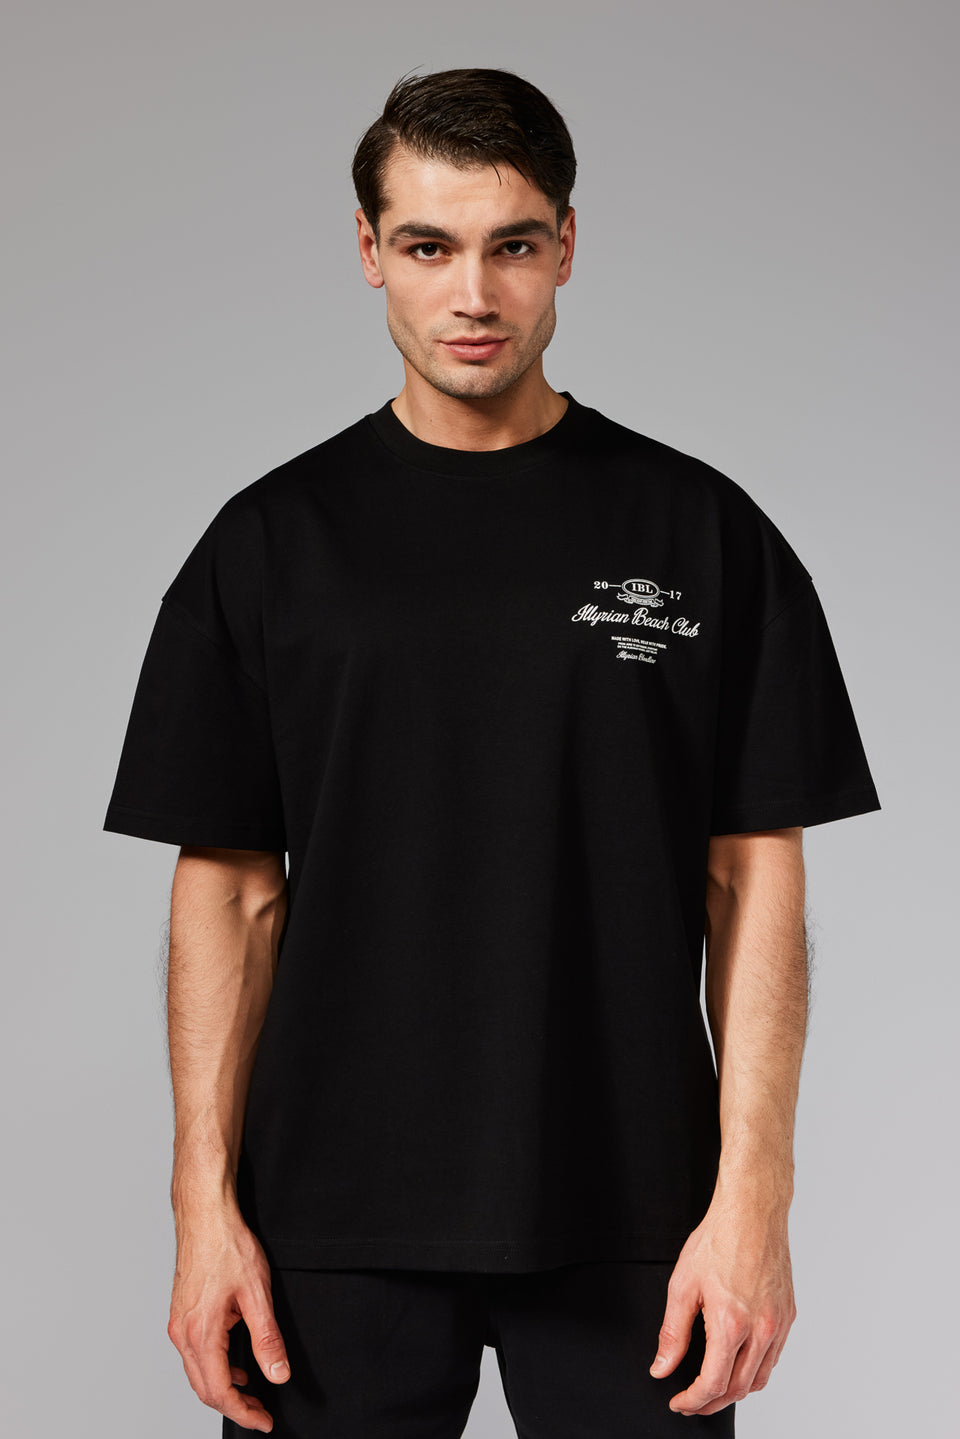 Illyrian Beach Club T-Shirt